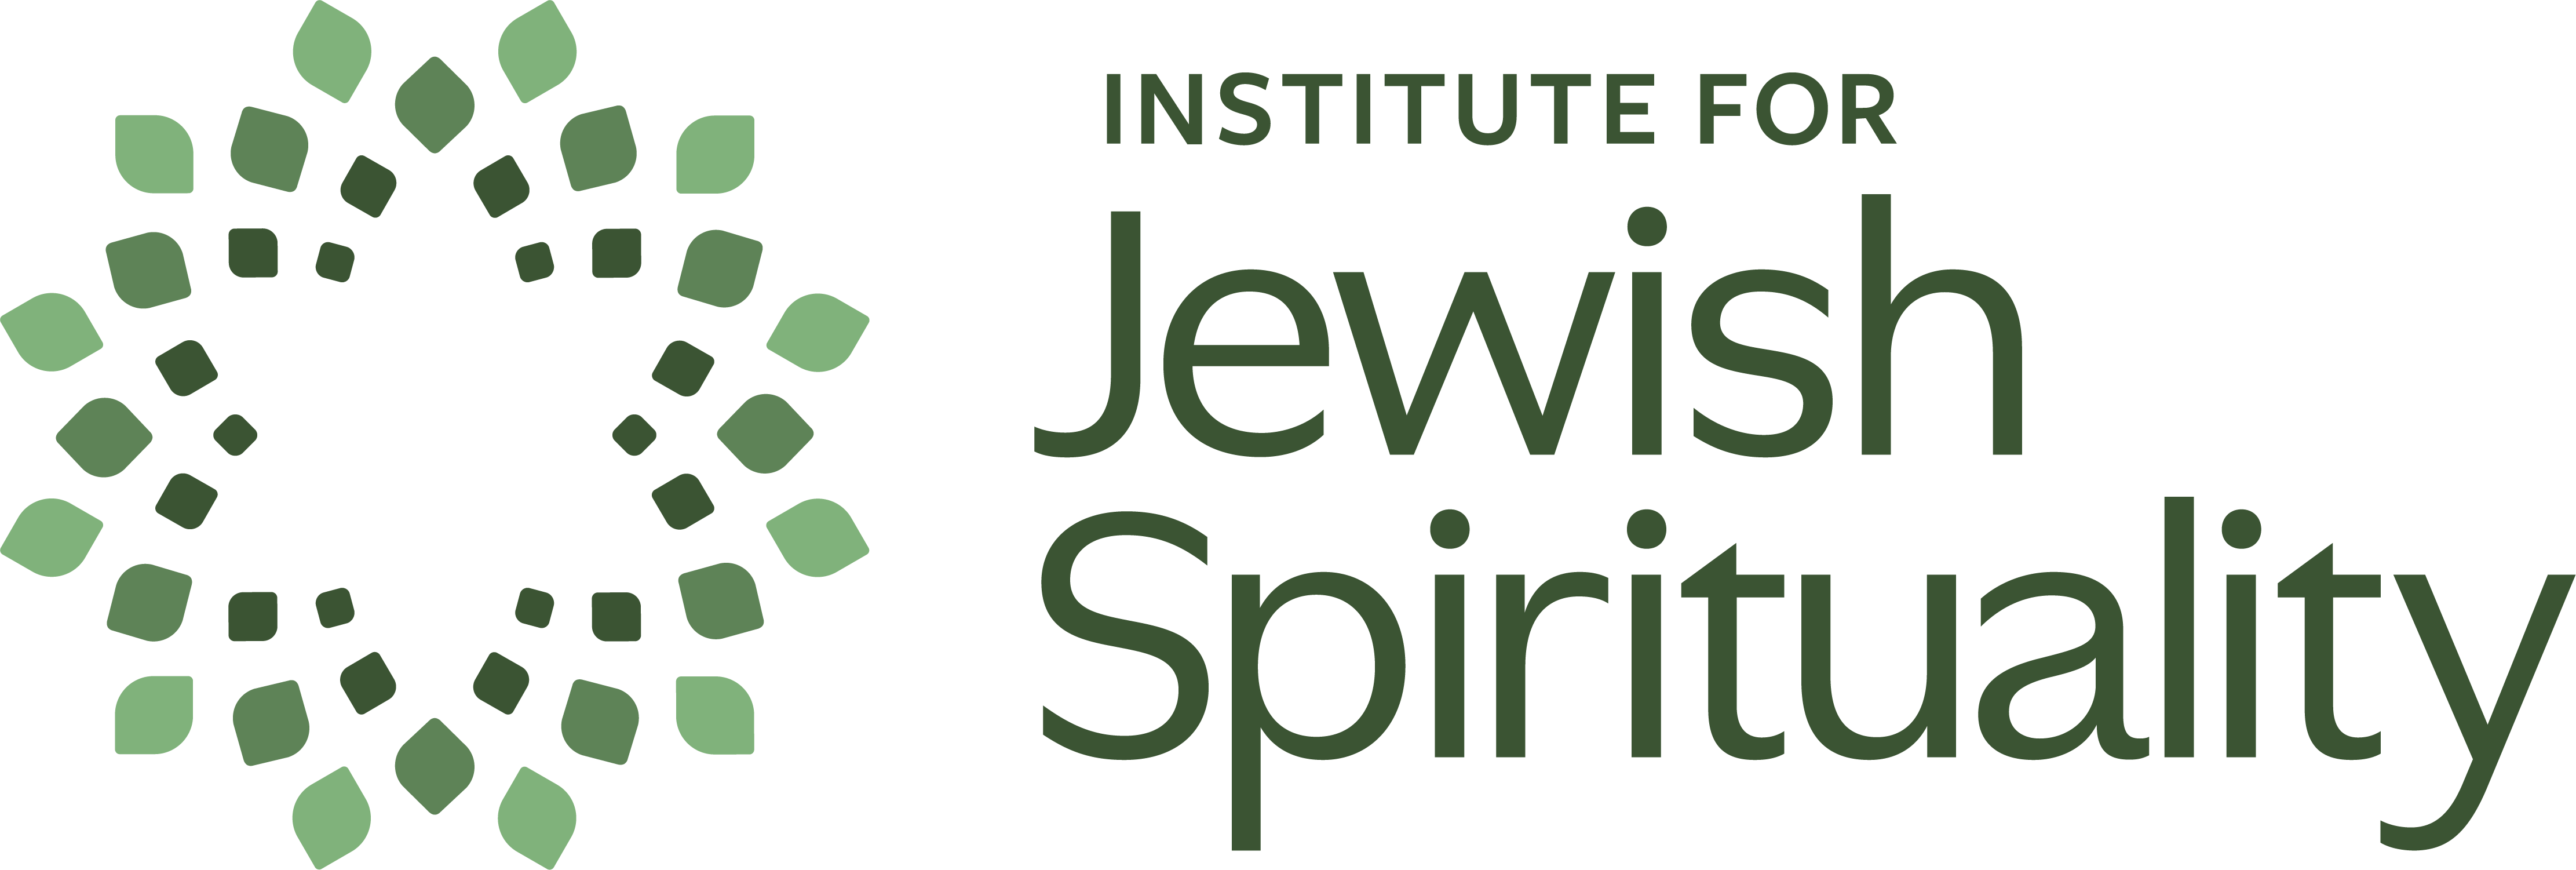 Institute for Jewish Spirituality.